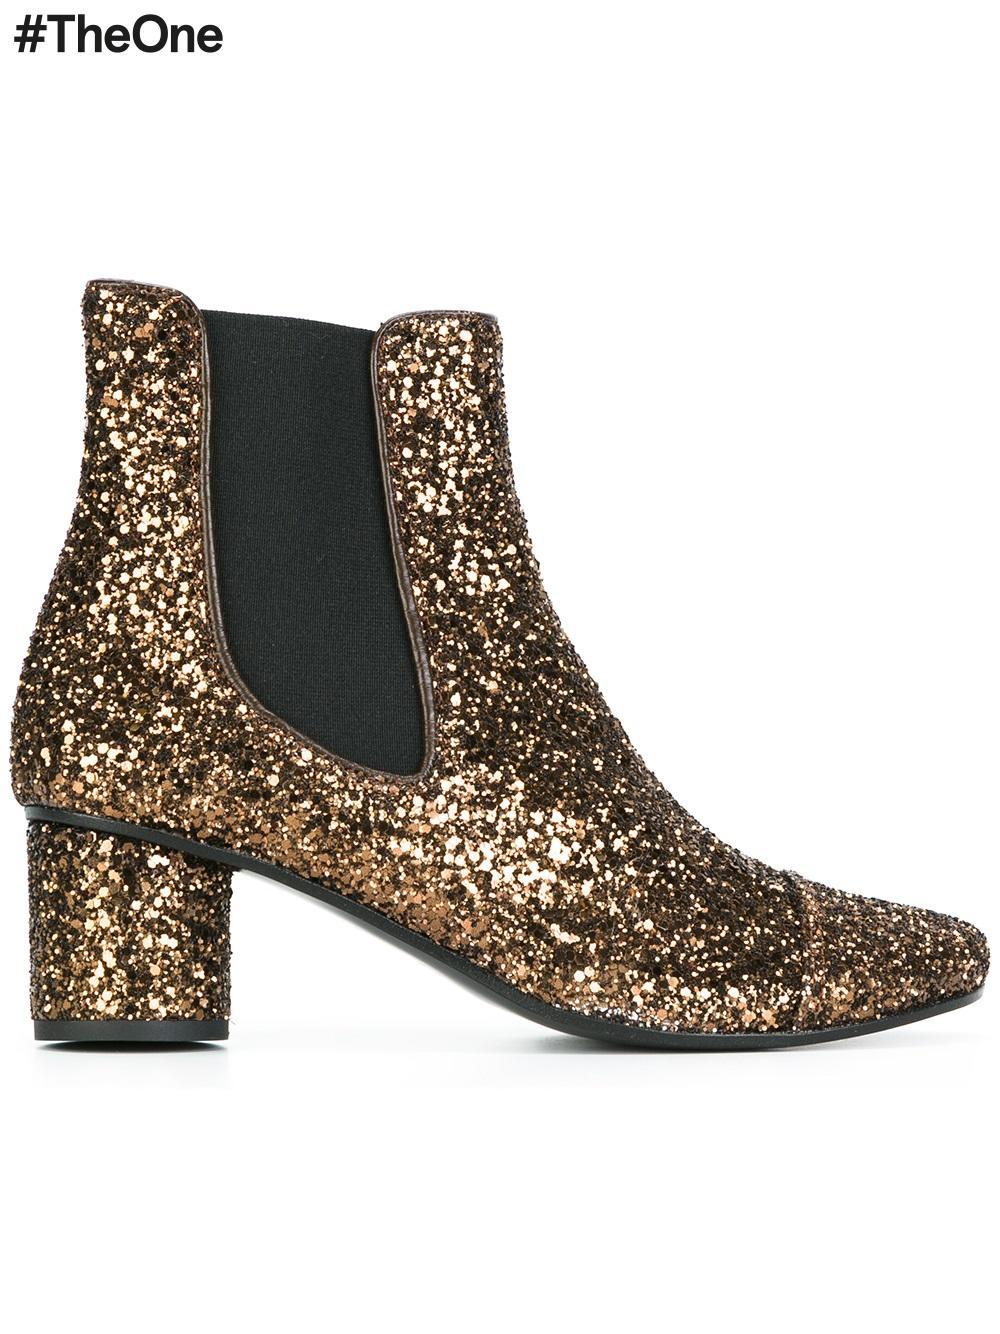 Stine Goya Leather 'anita' Glitter Boots in Brown - Lyst